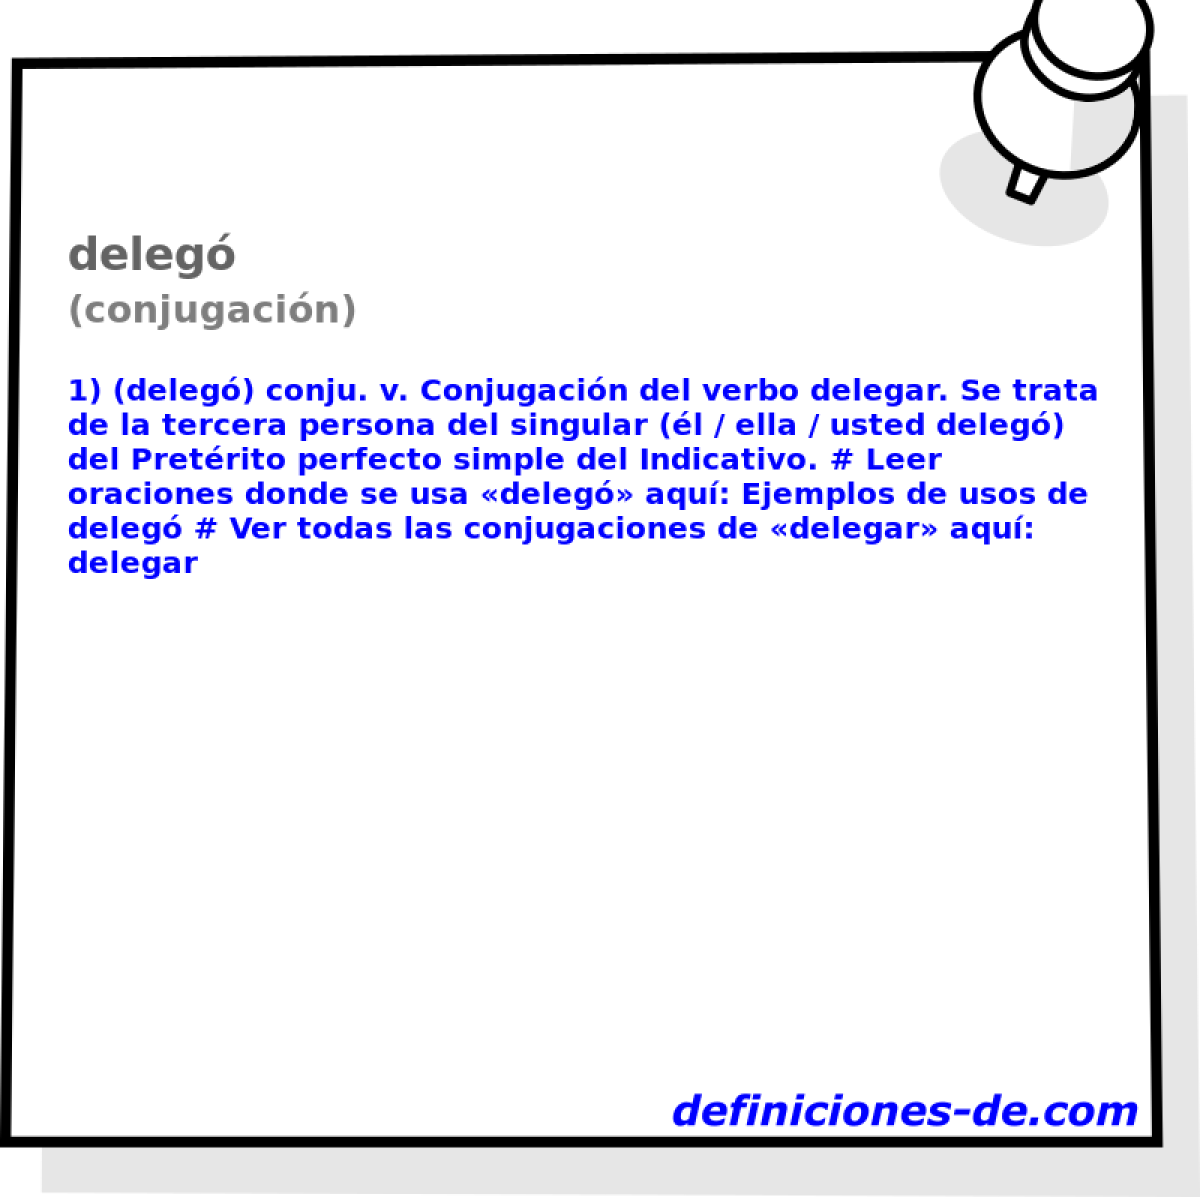 deleg (conjugacin)